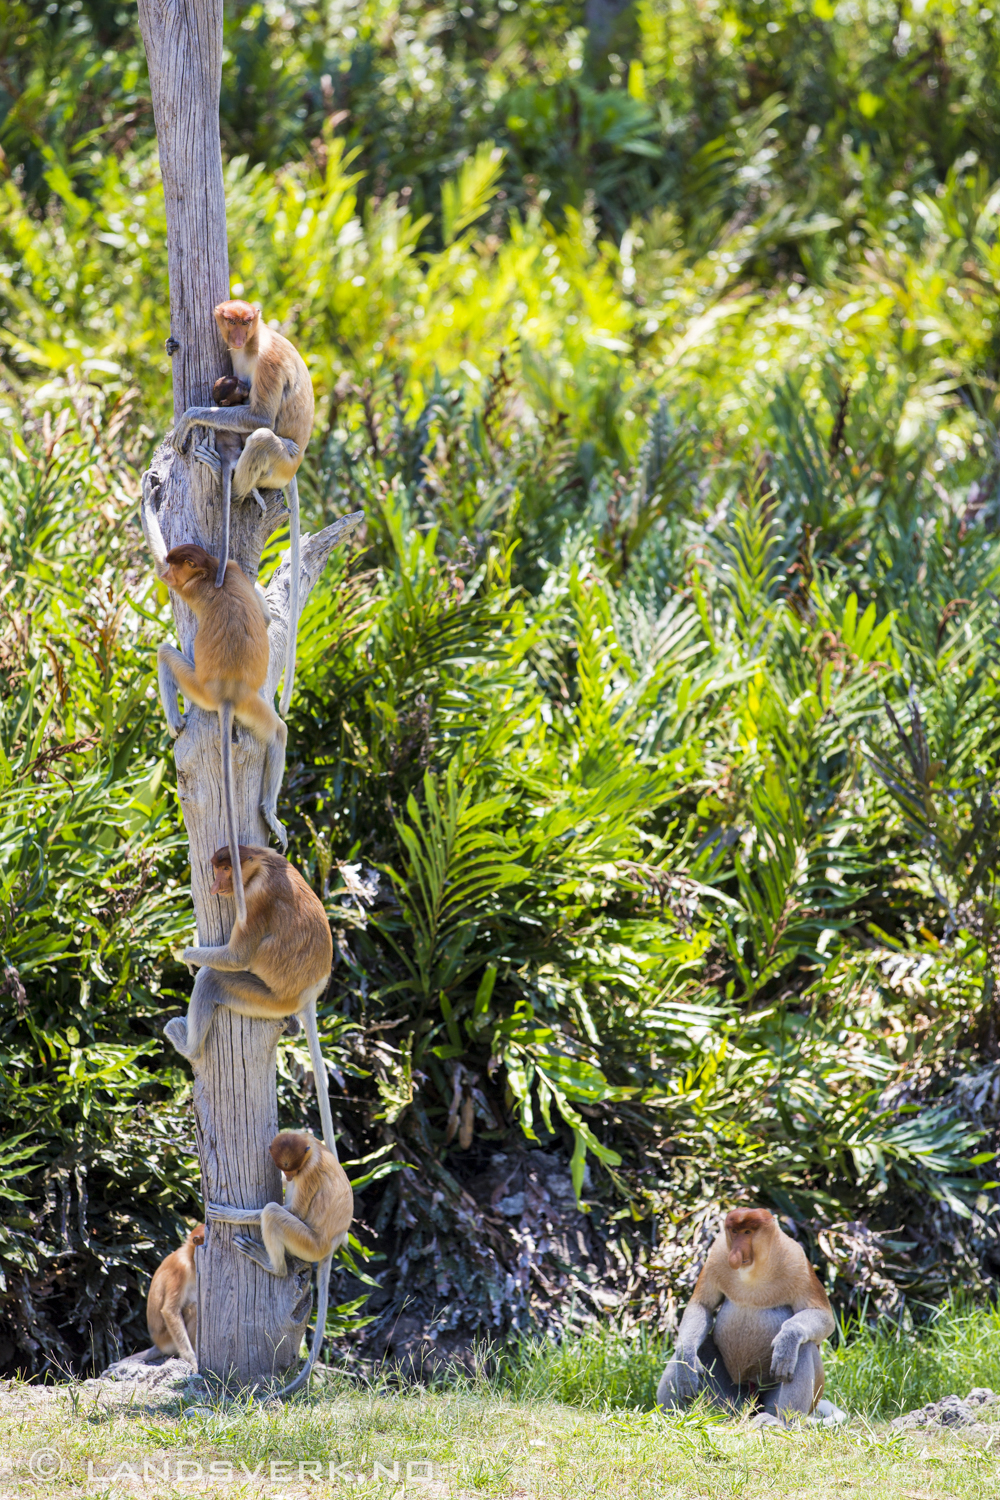 Wild Proboscis monkeys. Kota Kinabatangan, Borneo.

(Canon EOS 5D Mark III / Canon EF 70-200mm f/2.8 L IS II USM)